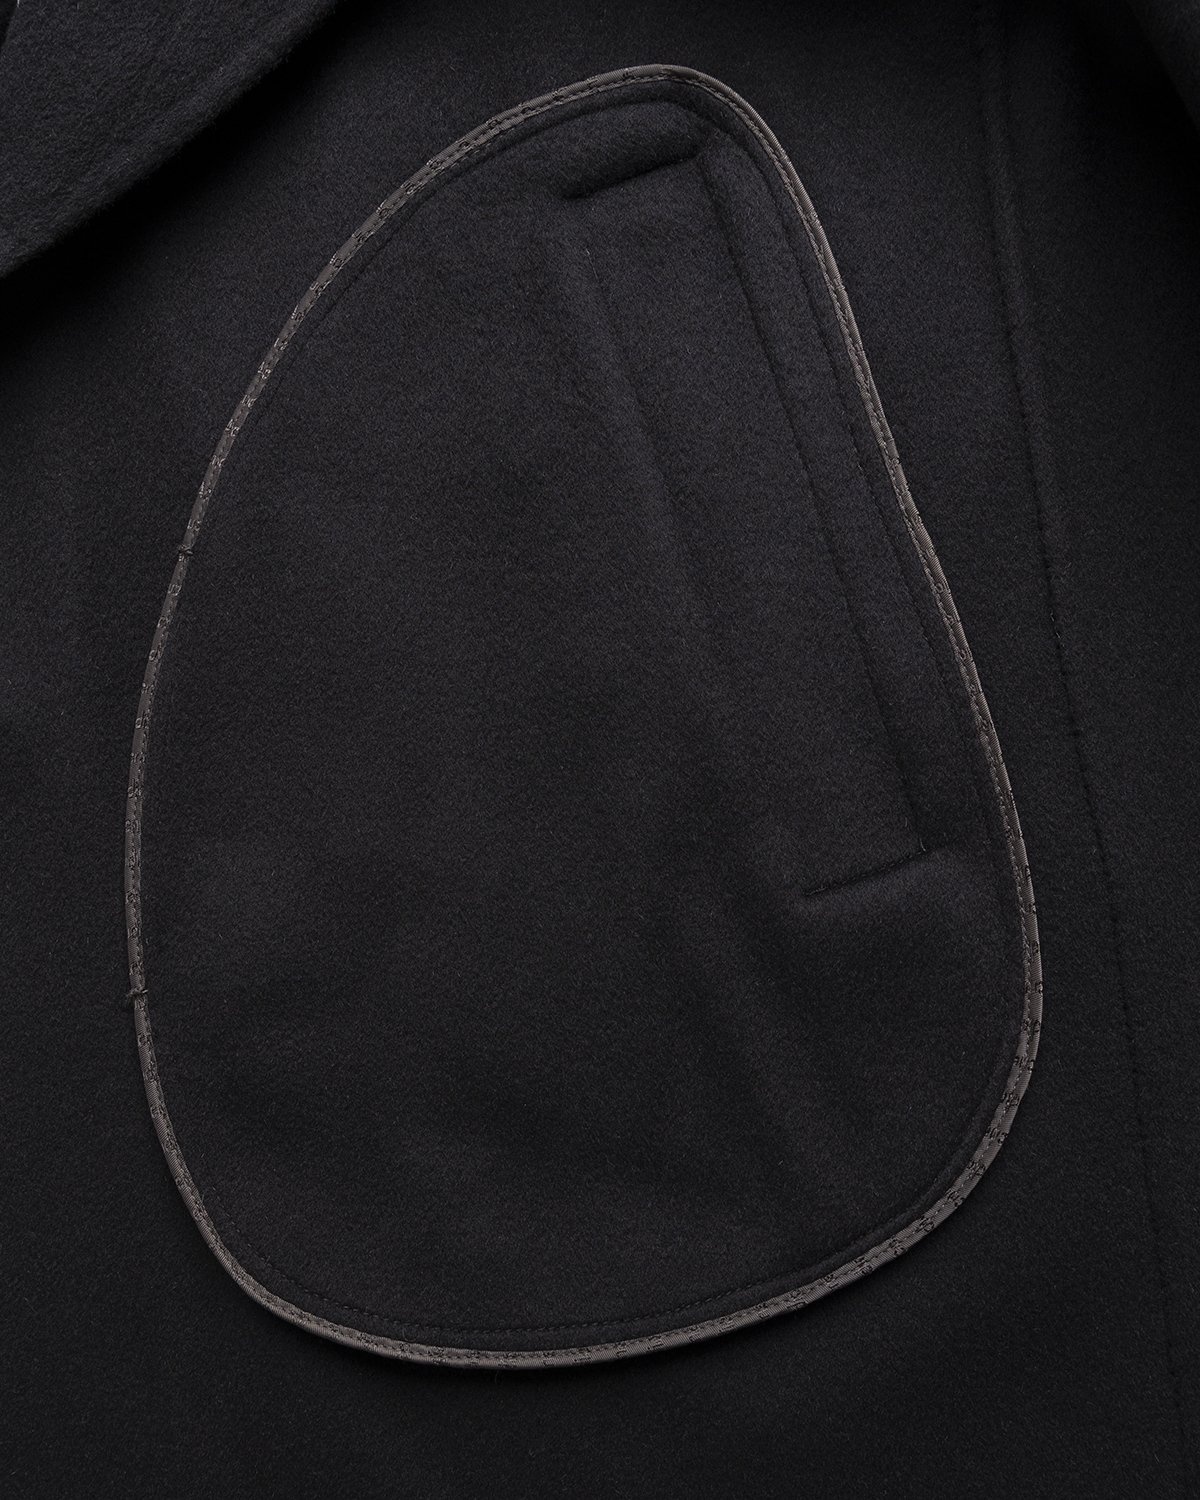 Acne Studios – Doubleface Coat Black - Trench Coats - Black - Image 6